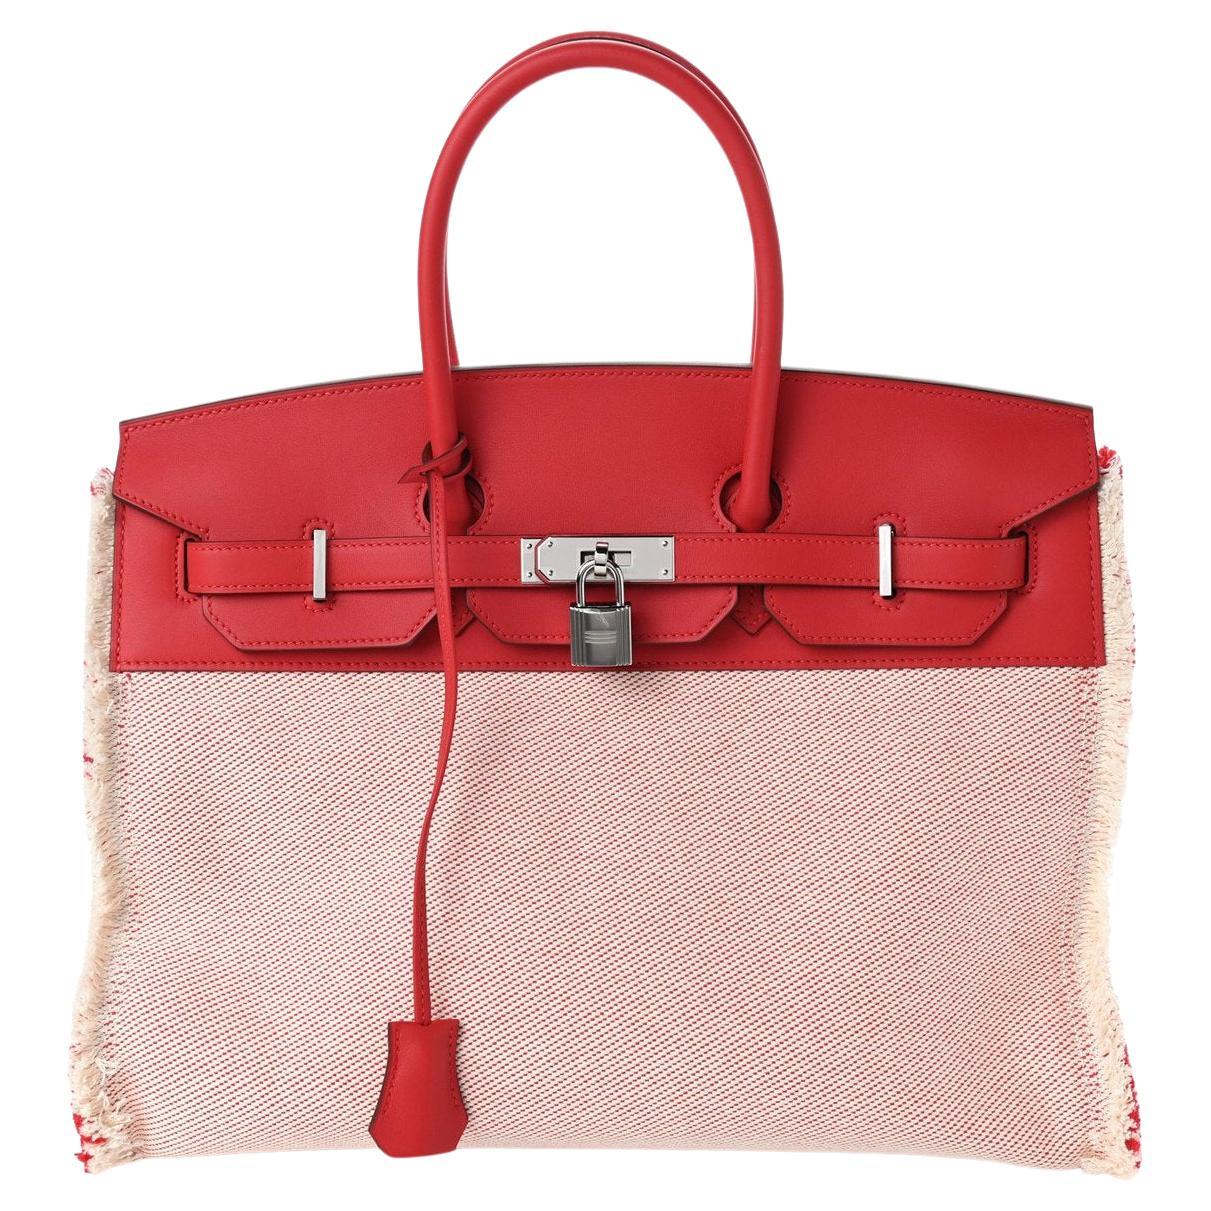 HERMÈS NEW Birkin 35 Tan Toile Swift Red Leather Fringe Top Handle Tote Bag